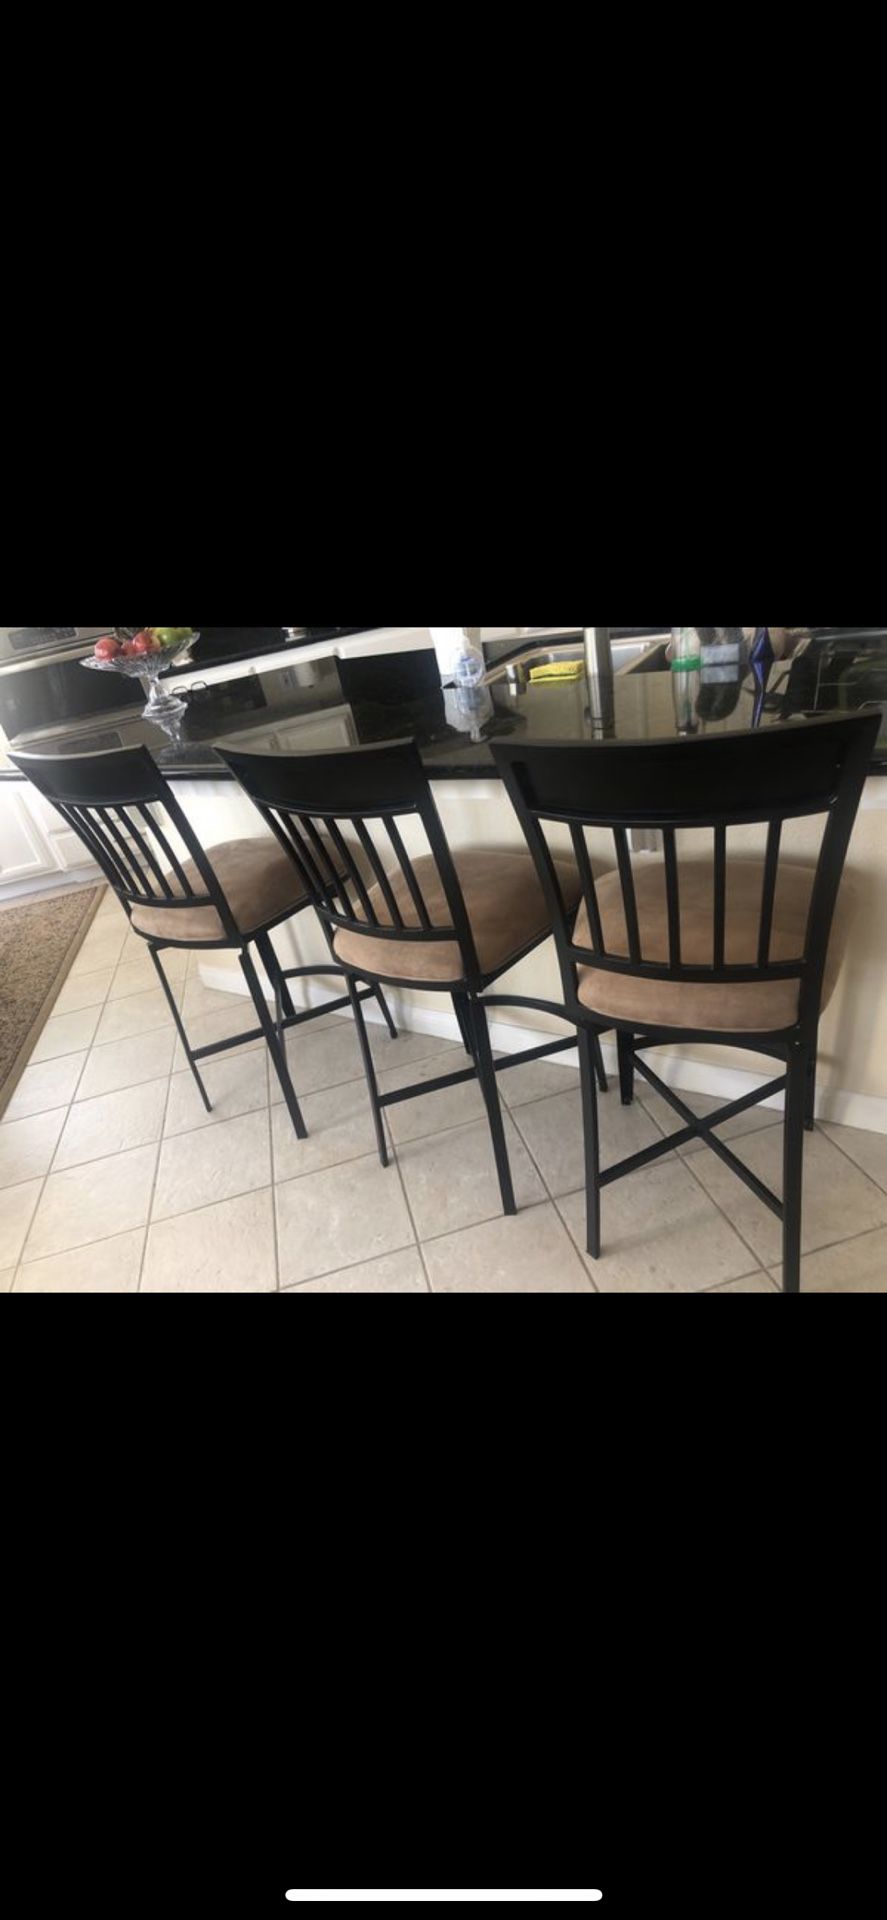 3 kitchen stools standard $100